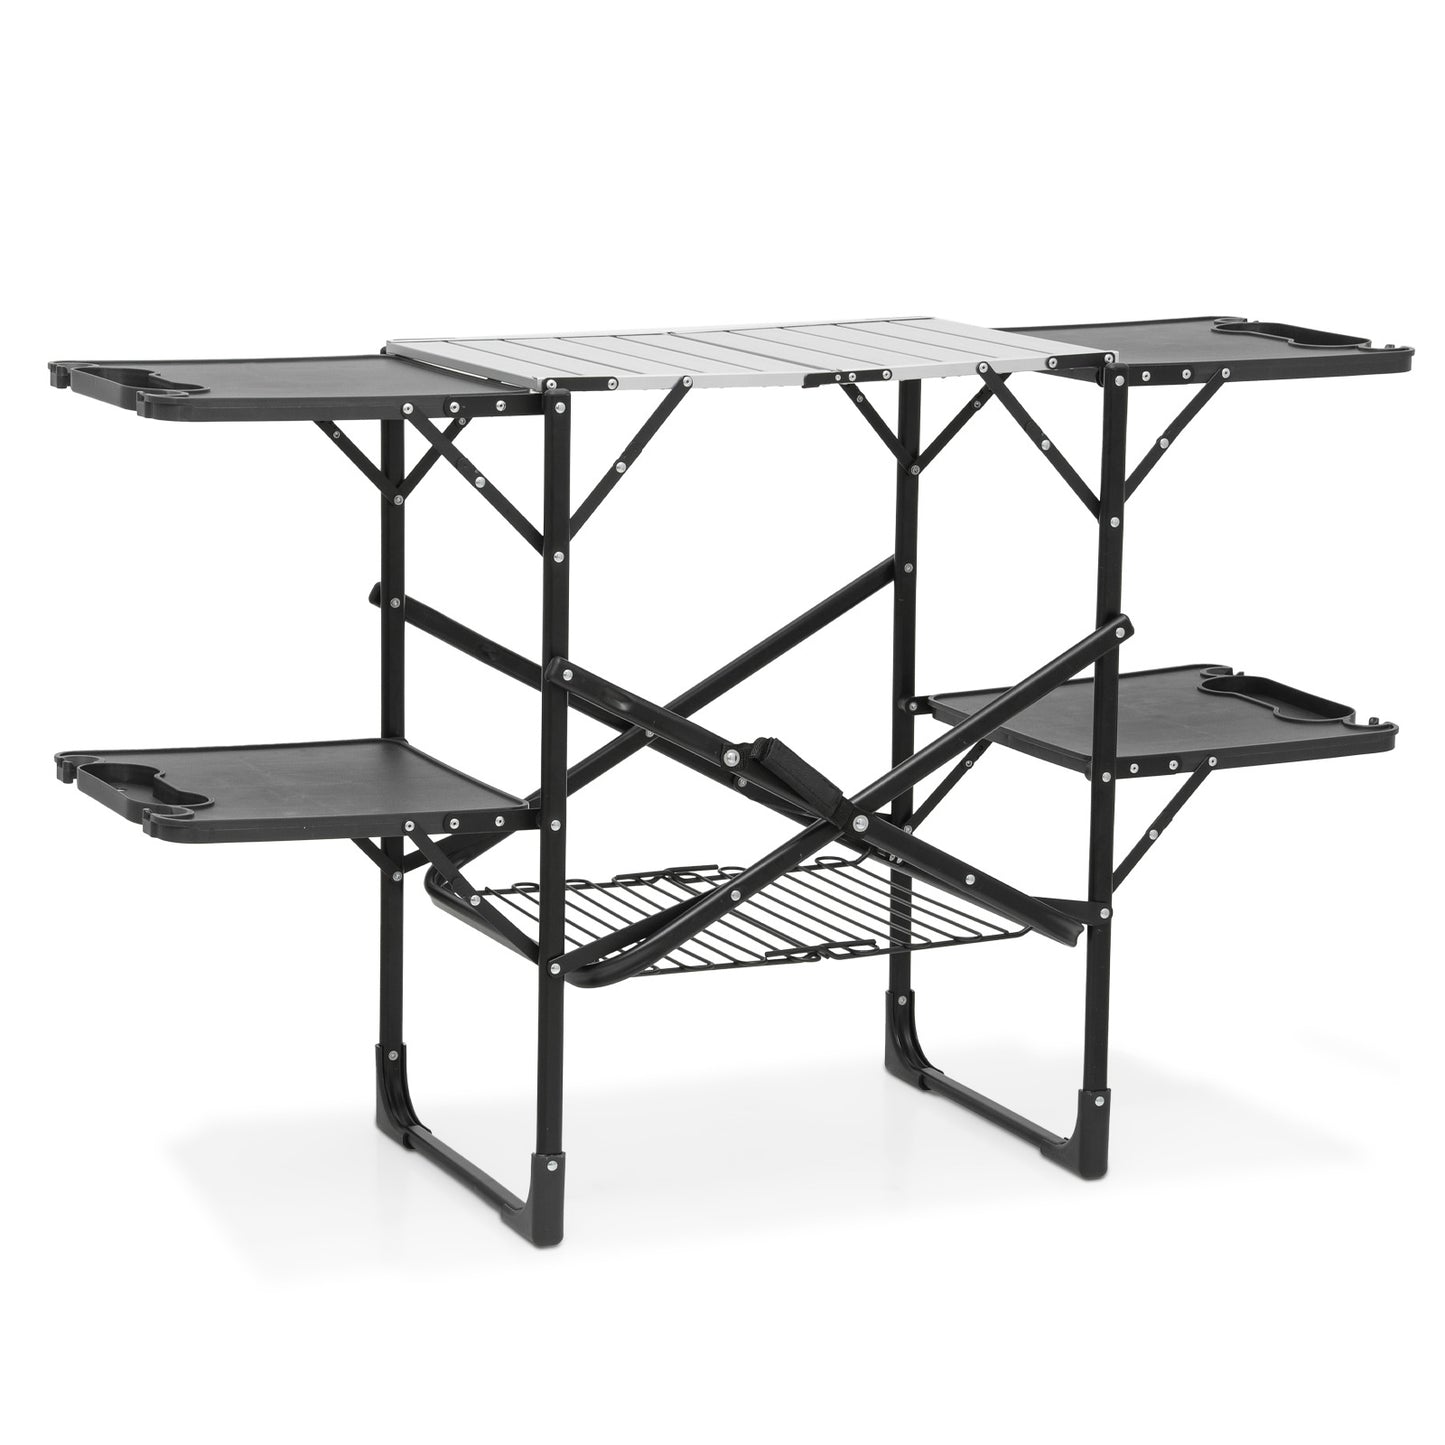 Folding Camping Table 52"x17.5"x32" - Black/silver